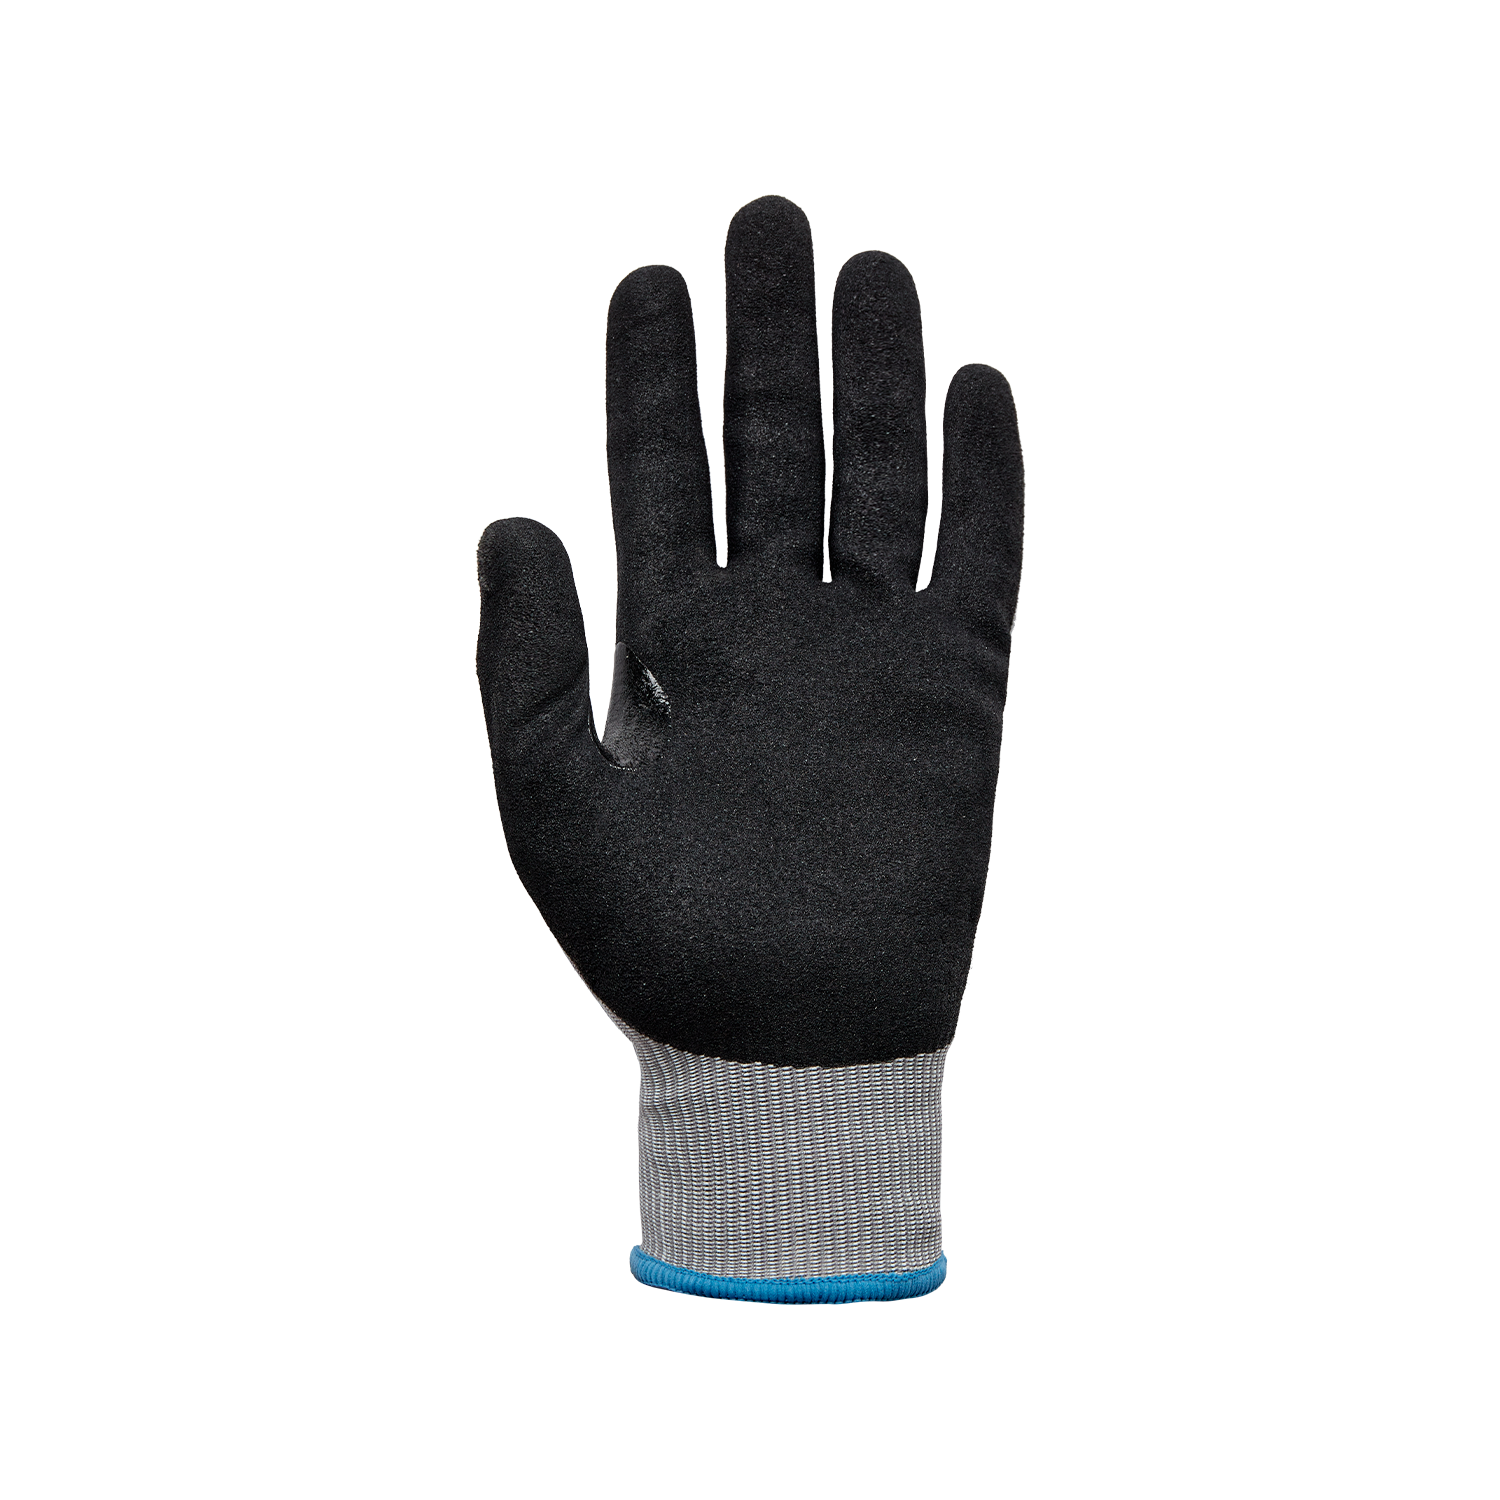 NORSE Cut-D cut-resistant assembly gloves size 11